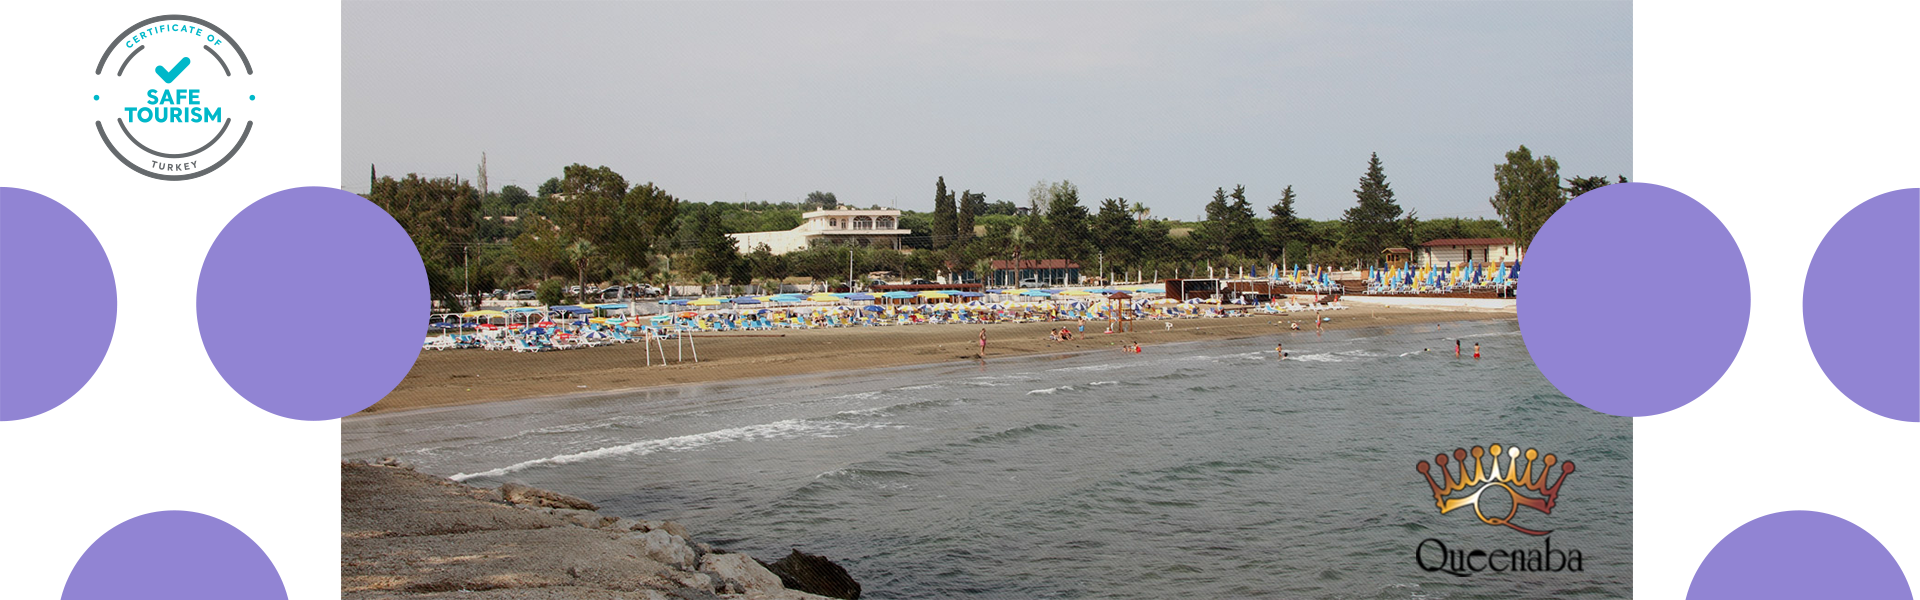 Queenaba Hotel Beach